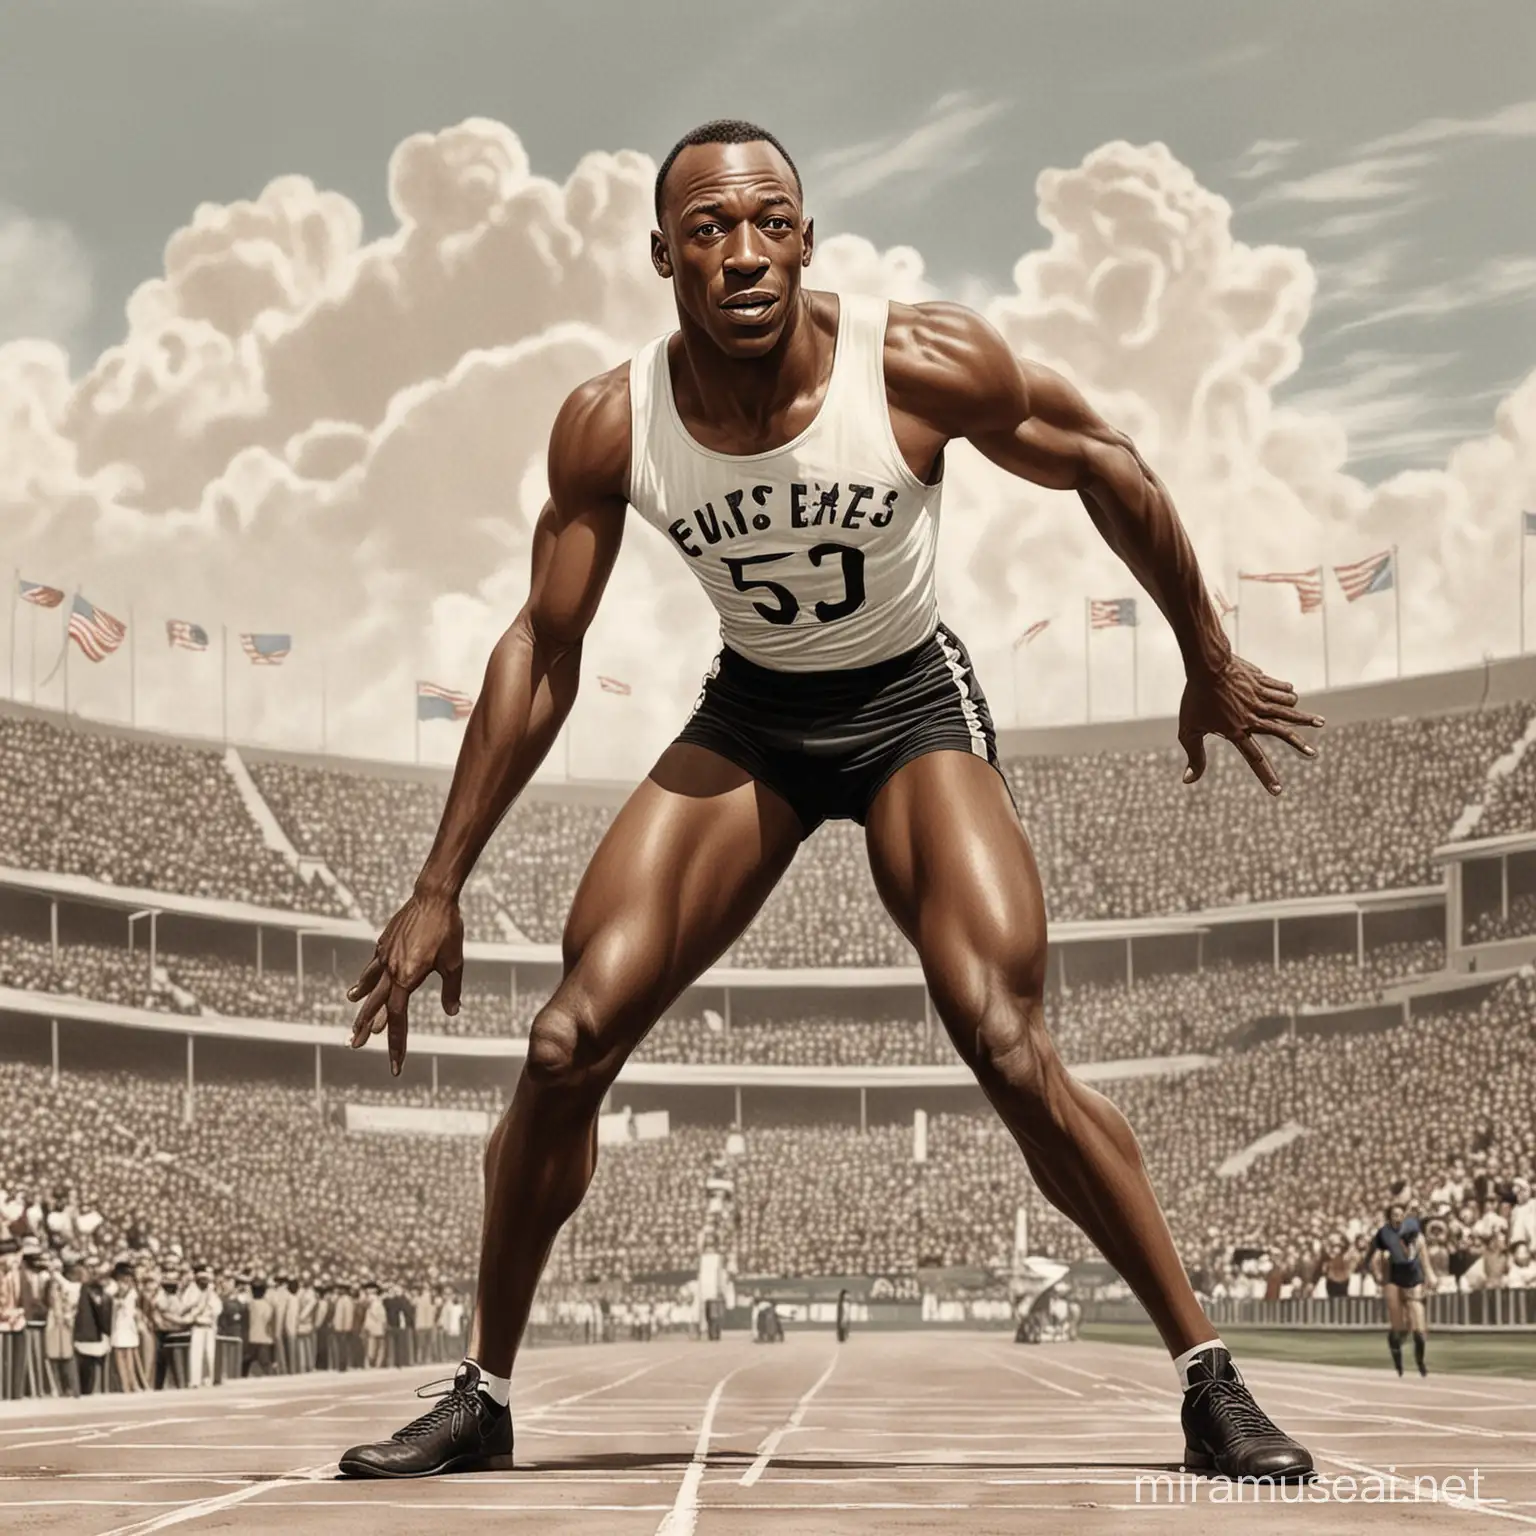 Jesse Owens Cartoon Legendary Athlete in Iconic Pose